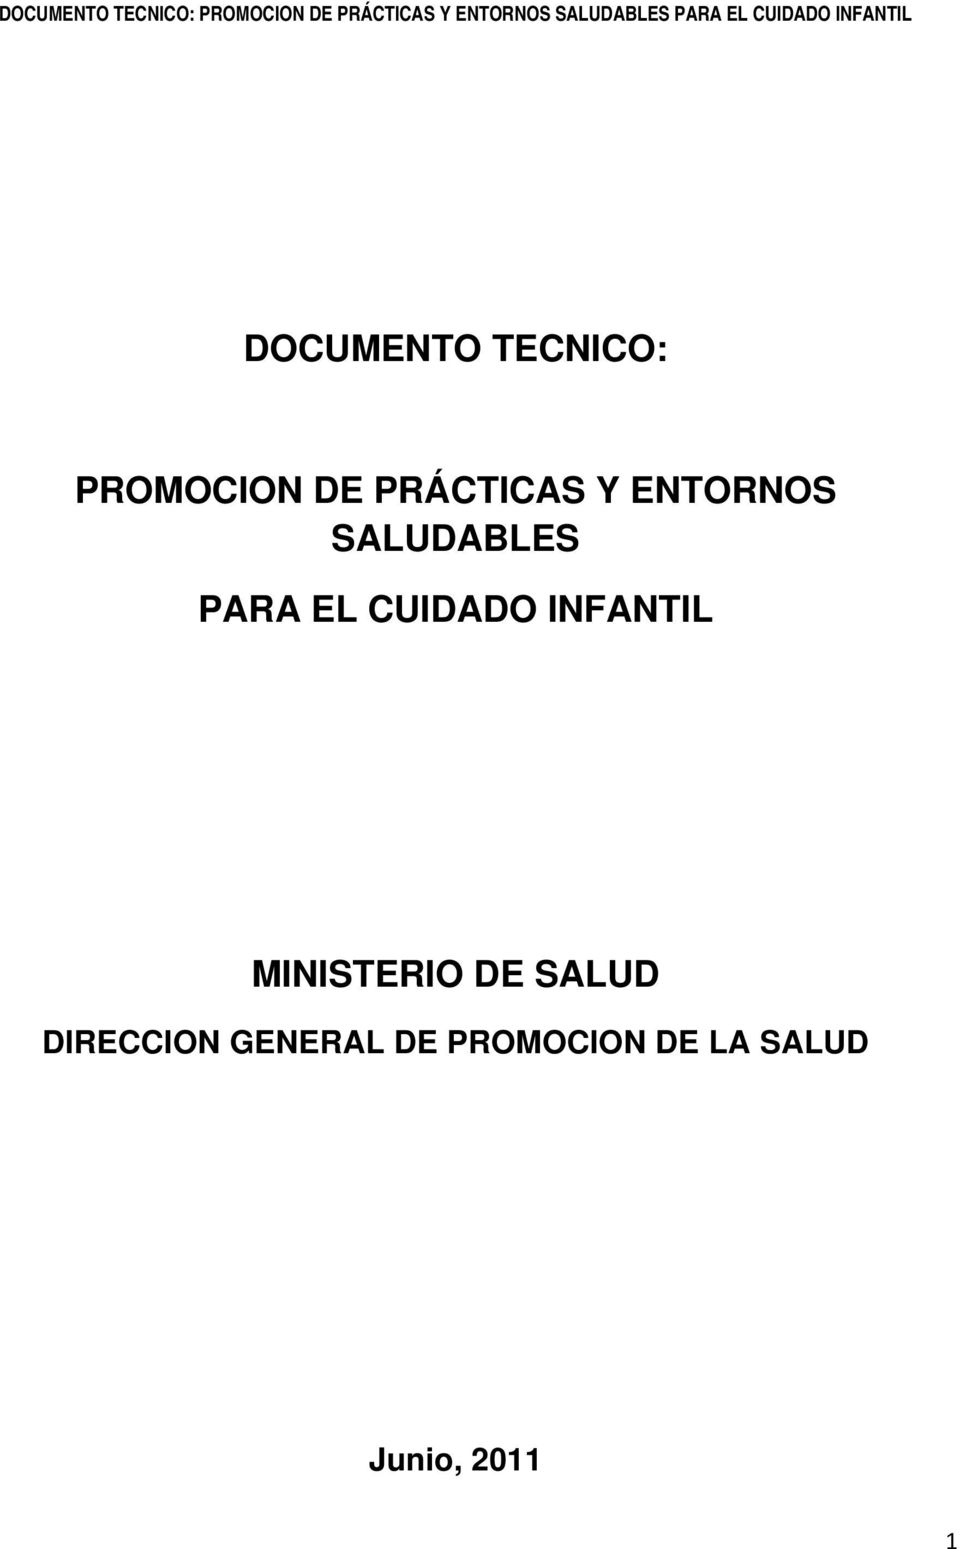 INFANTIL MINISTERIO DE SALUD DIRECCION